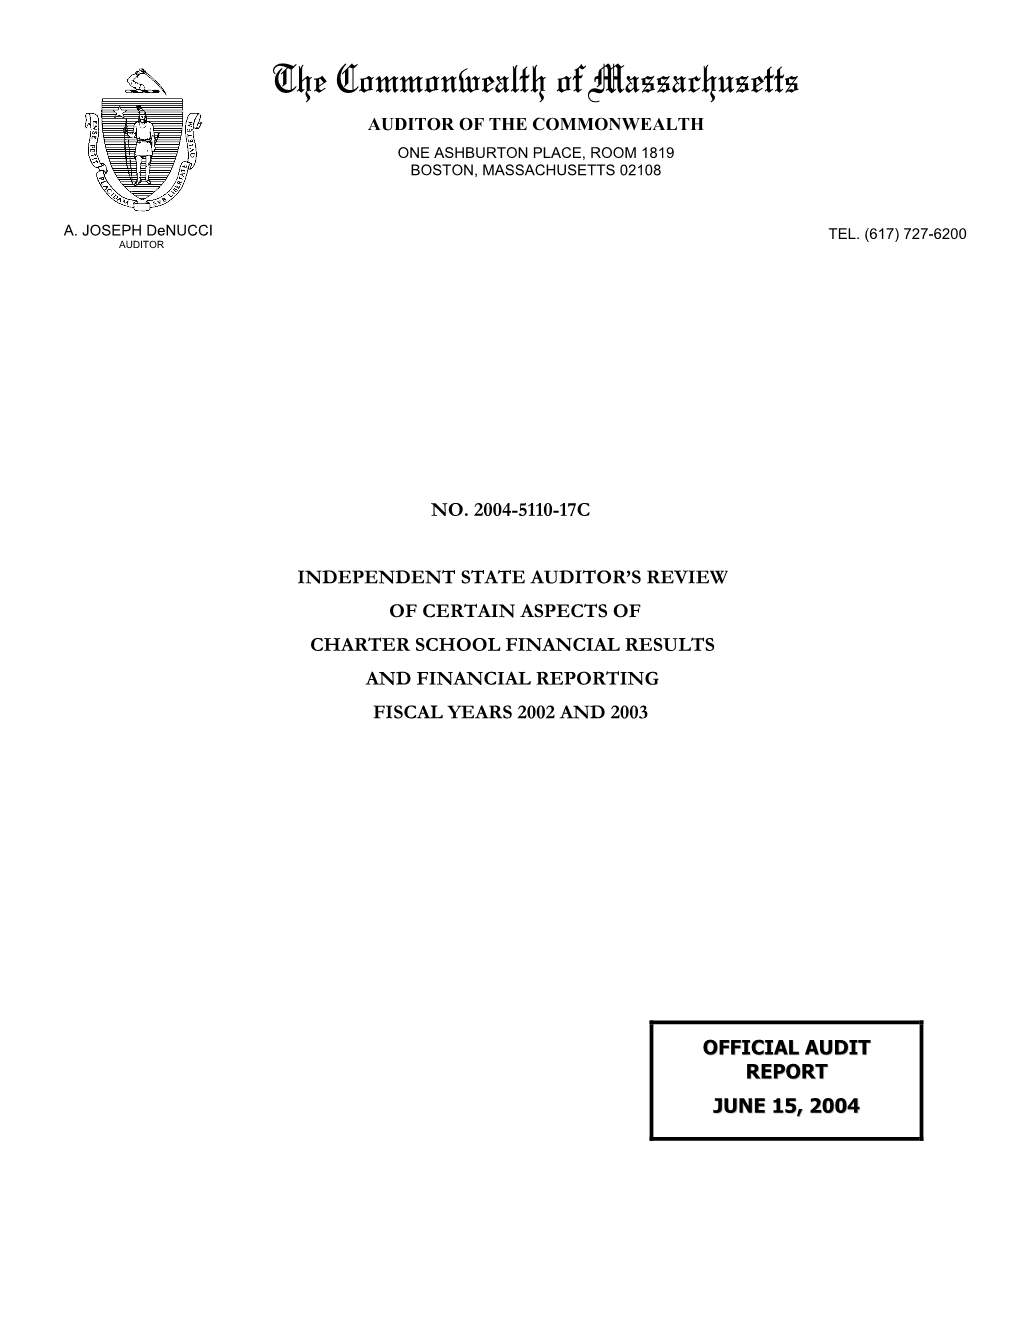 2004-5110-17C Charter School Financial Results